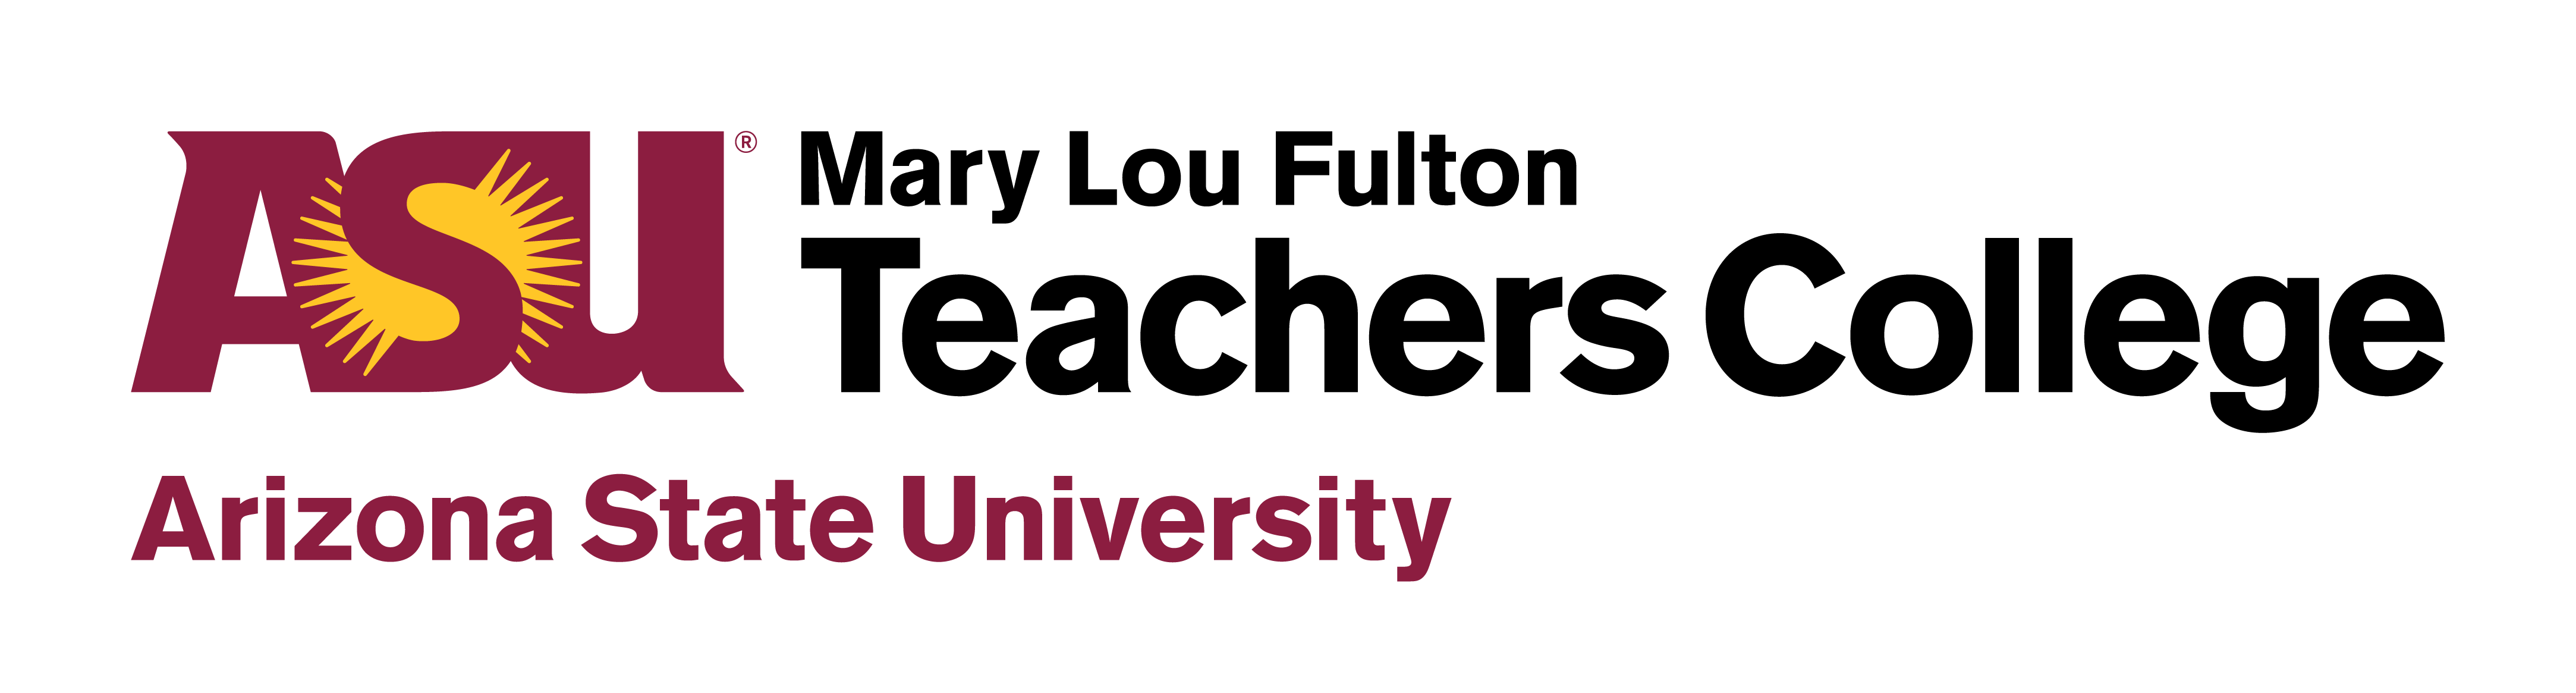 ASU Mary Lou Fulton Teachers College Next Education Workforce home